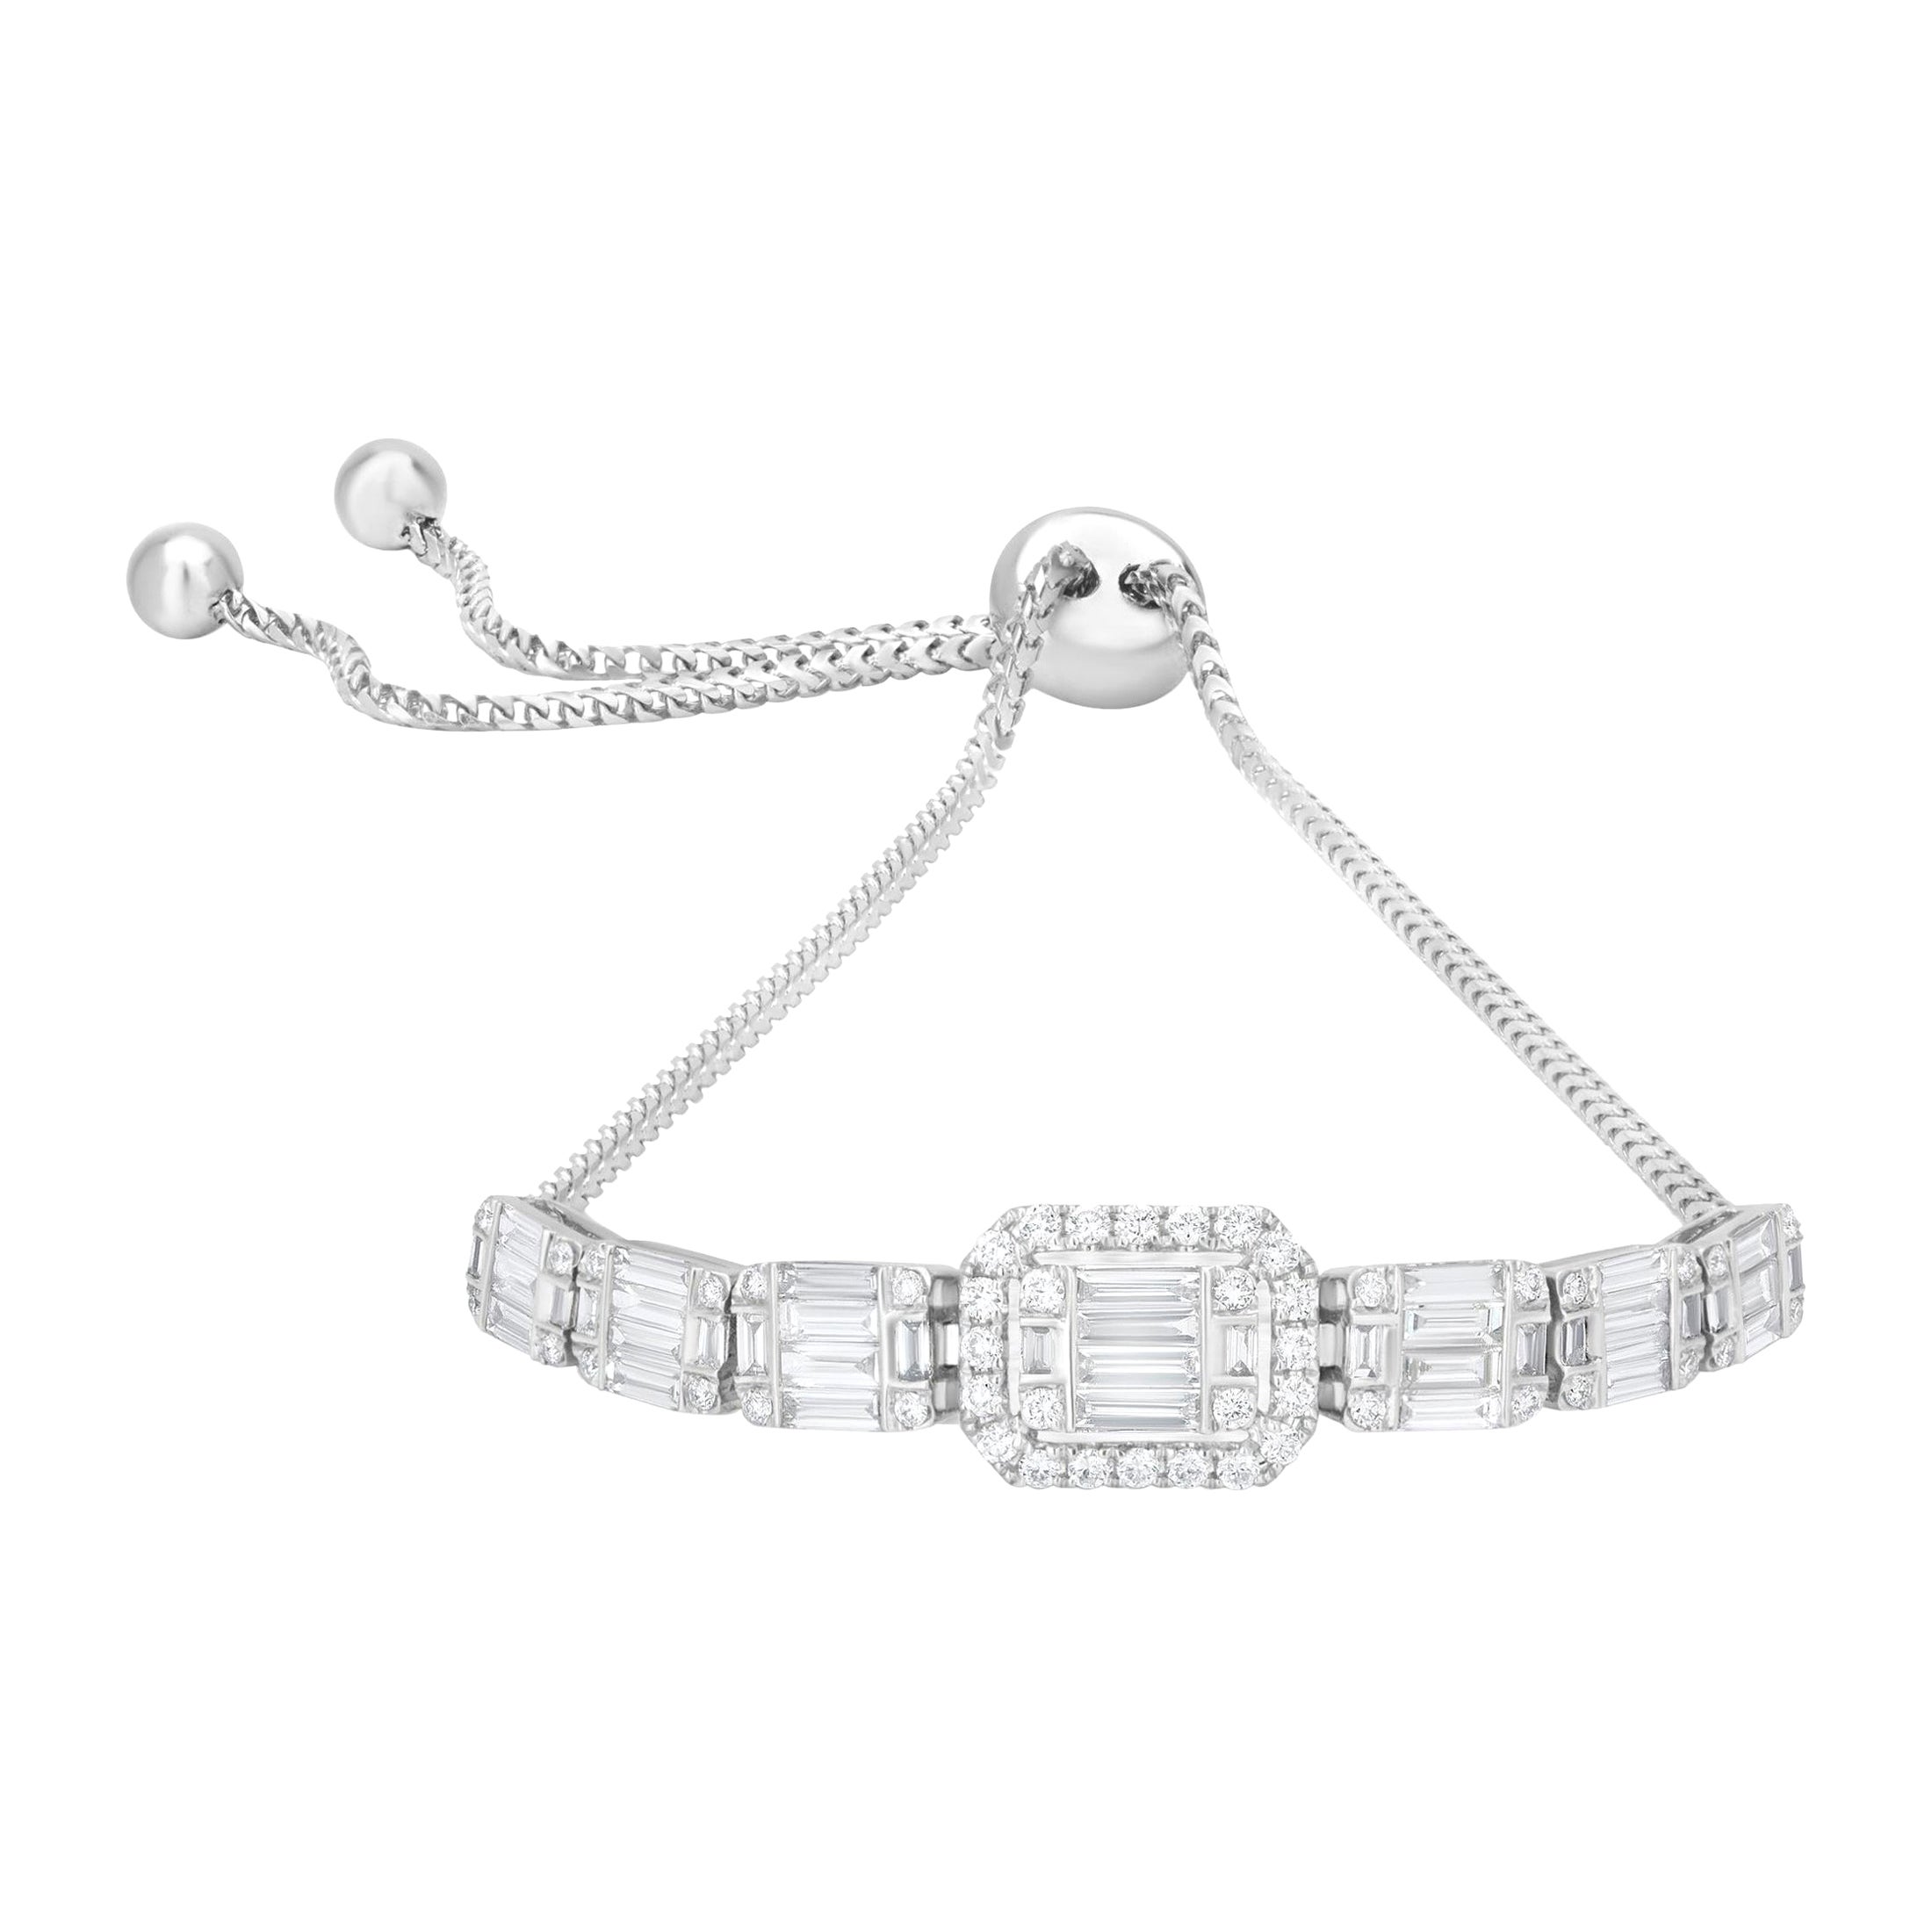 Luxle 1.60cttw Diamond Bolo Bracelet in 18k White Gold For Sale